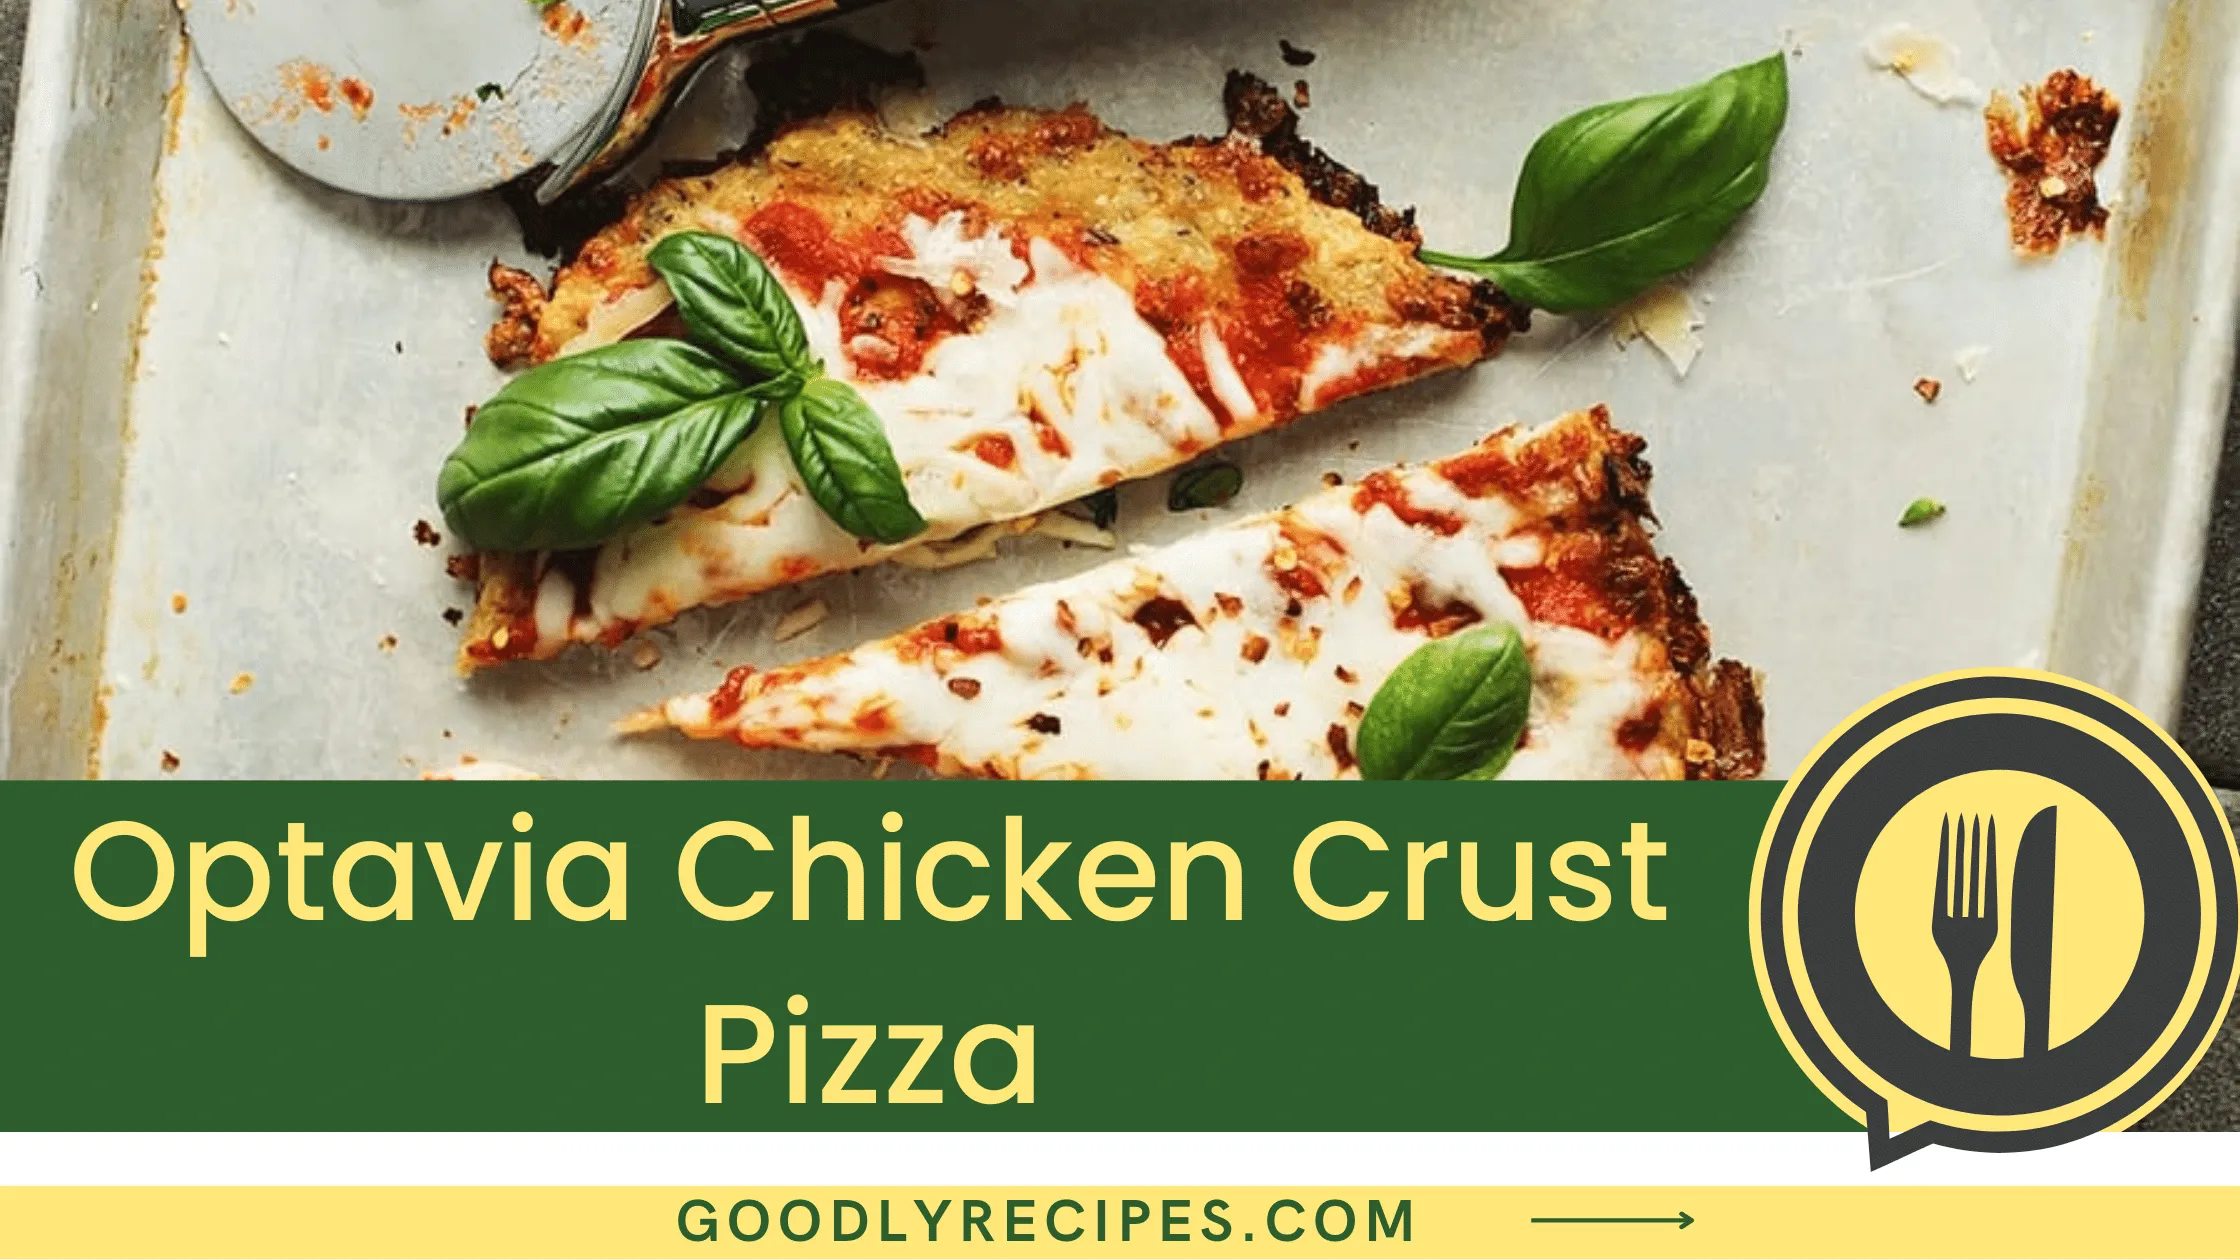 Optavia Chicken Crust Pizza